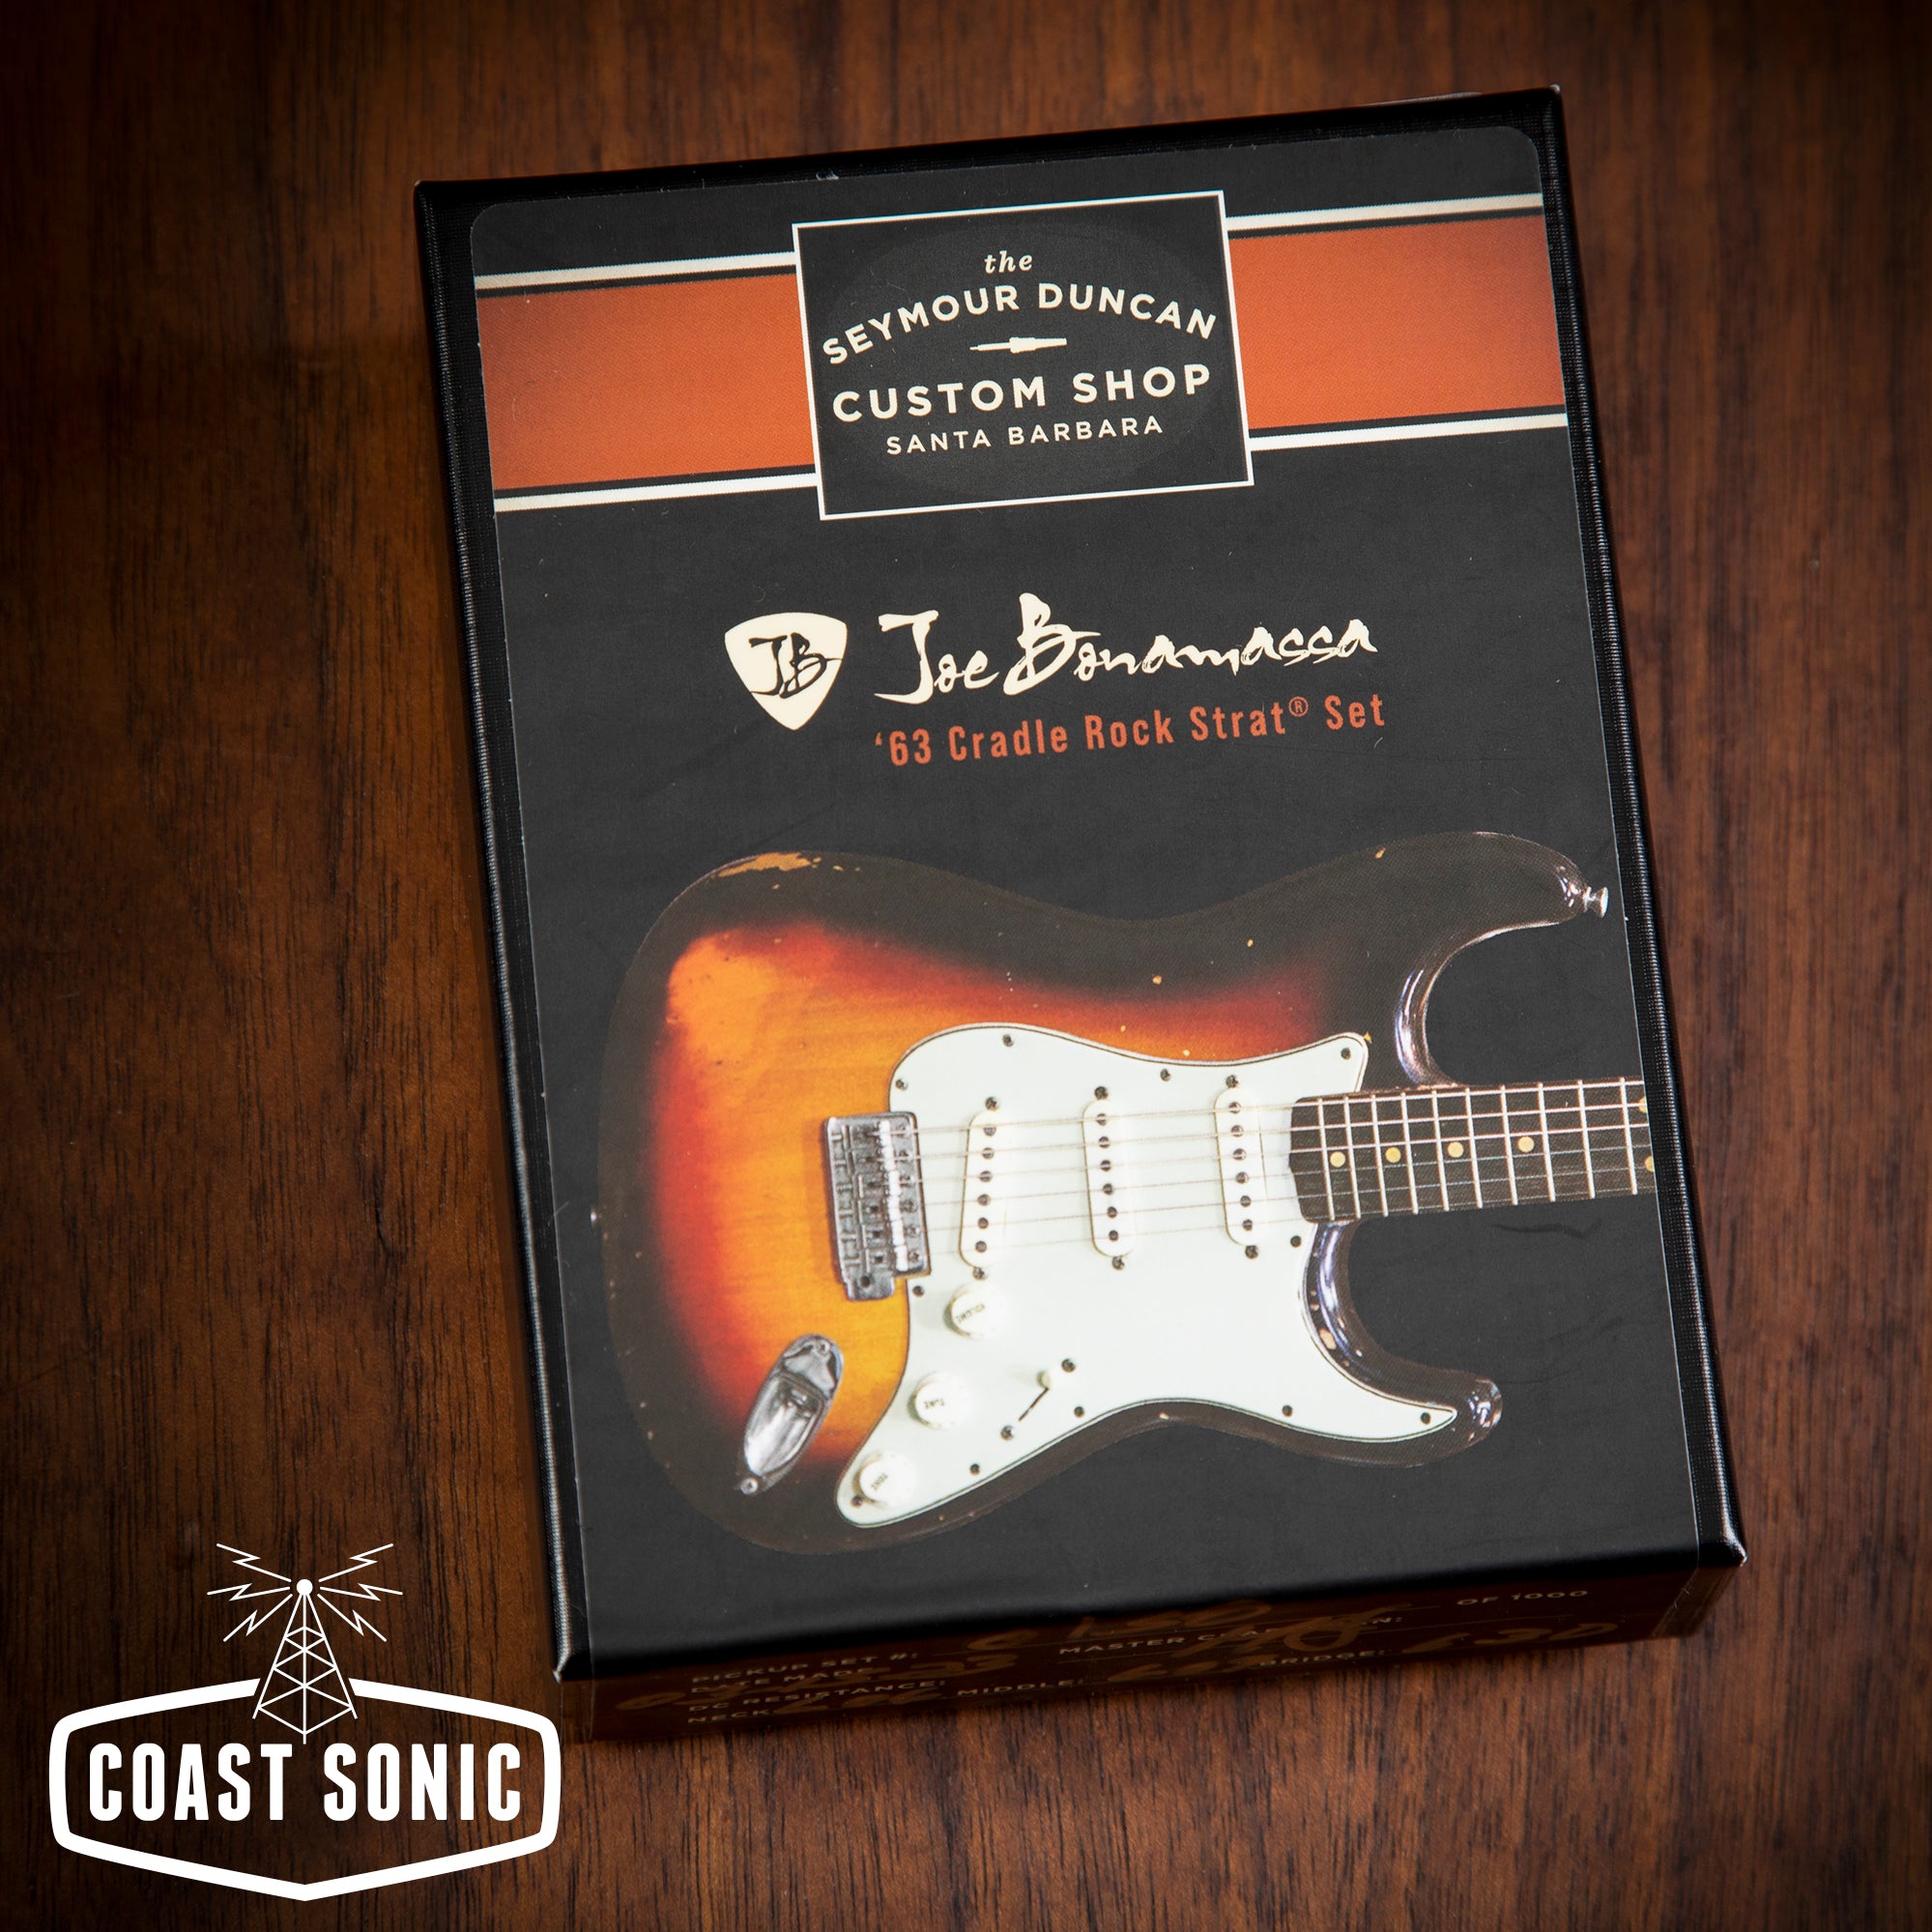 Seymour Duncan Joe Bonamassa ‘63 Cradle Rock Strat Limited Edition Set